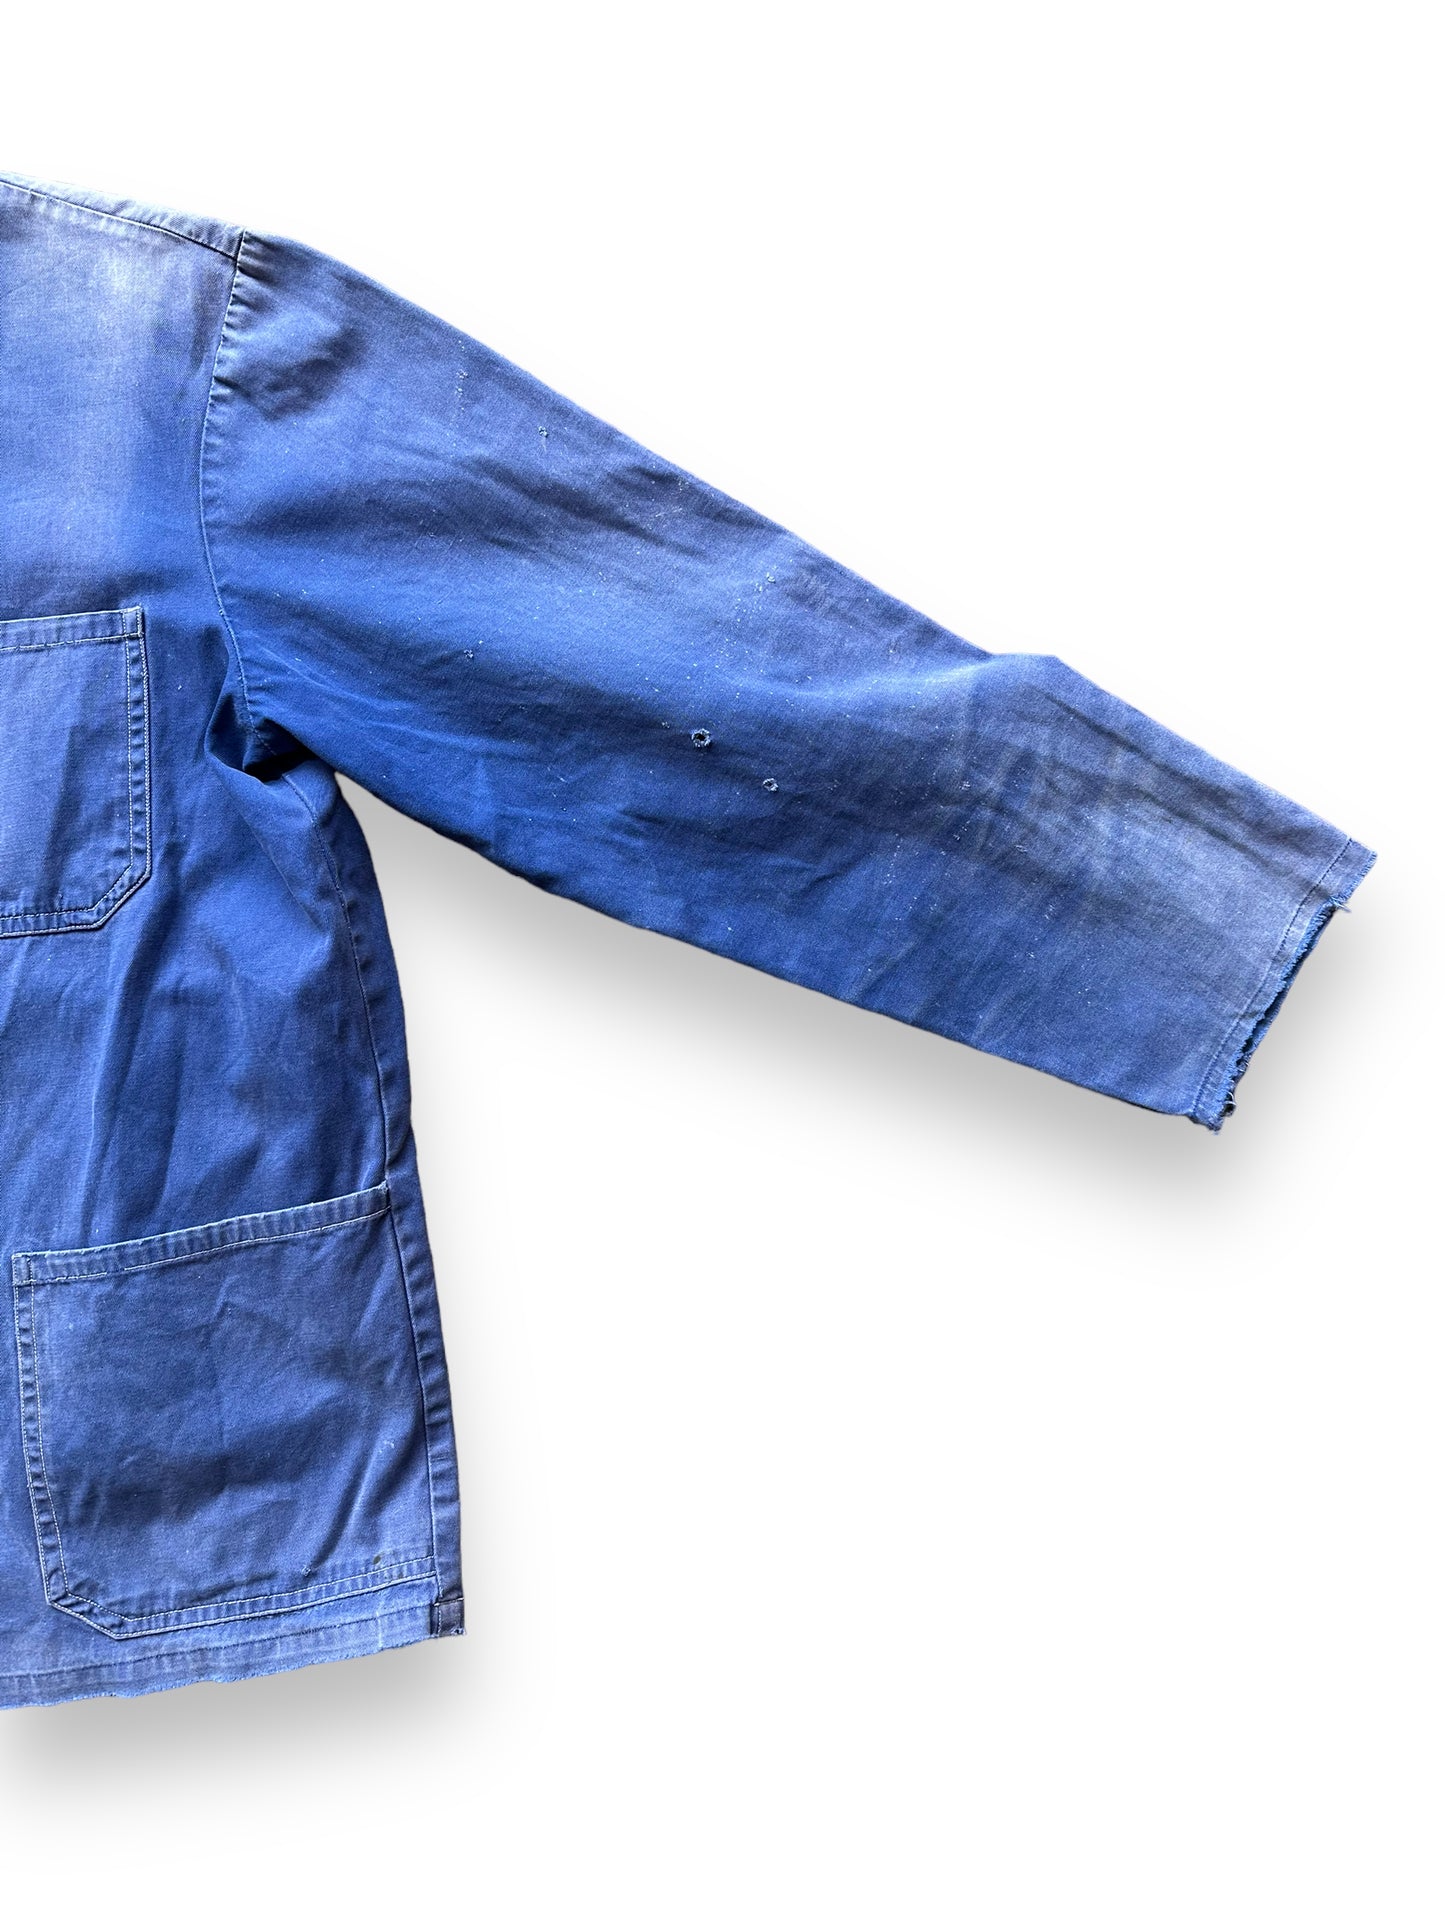 Left Sleeve View on Vintage Faded French Workwear Chore Coat SZ L | Vintage European Workwear Seattle | Barn Owl Vintage Goods Seattle